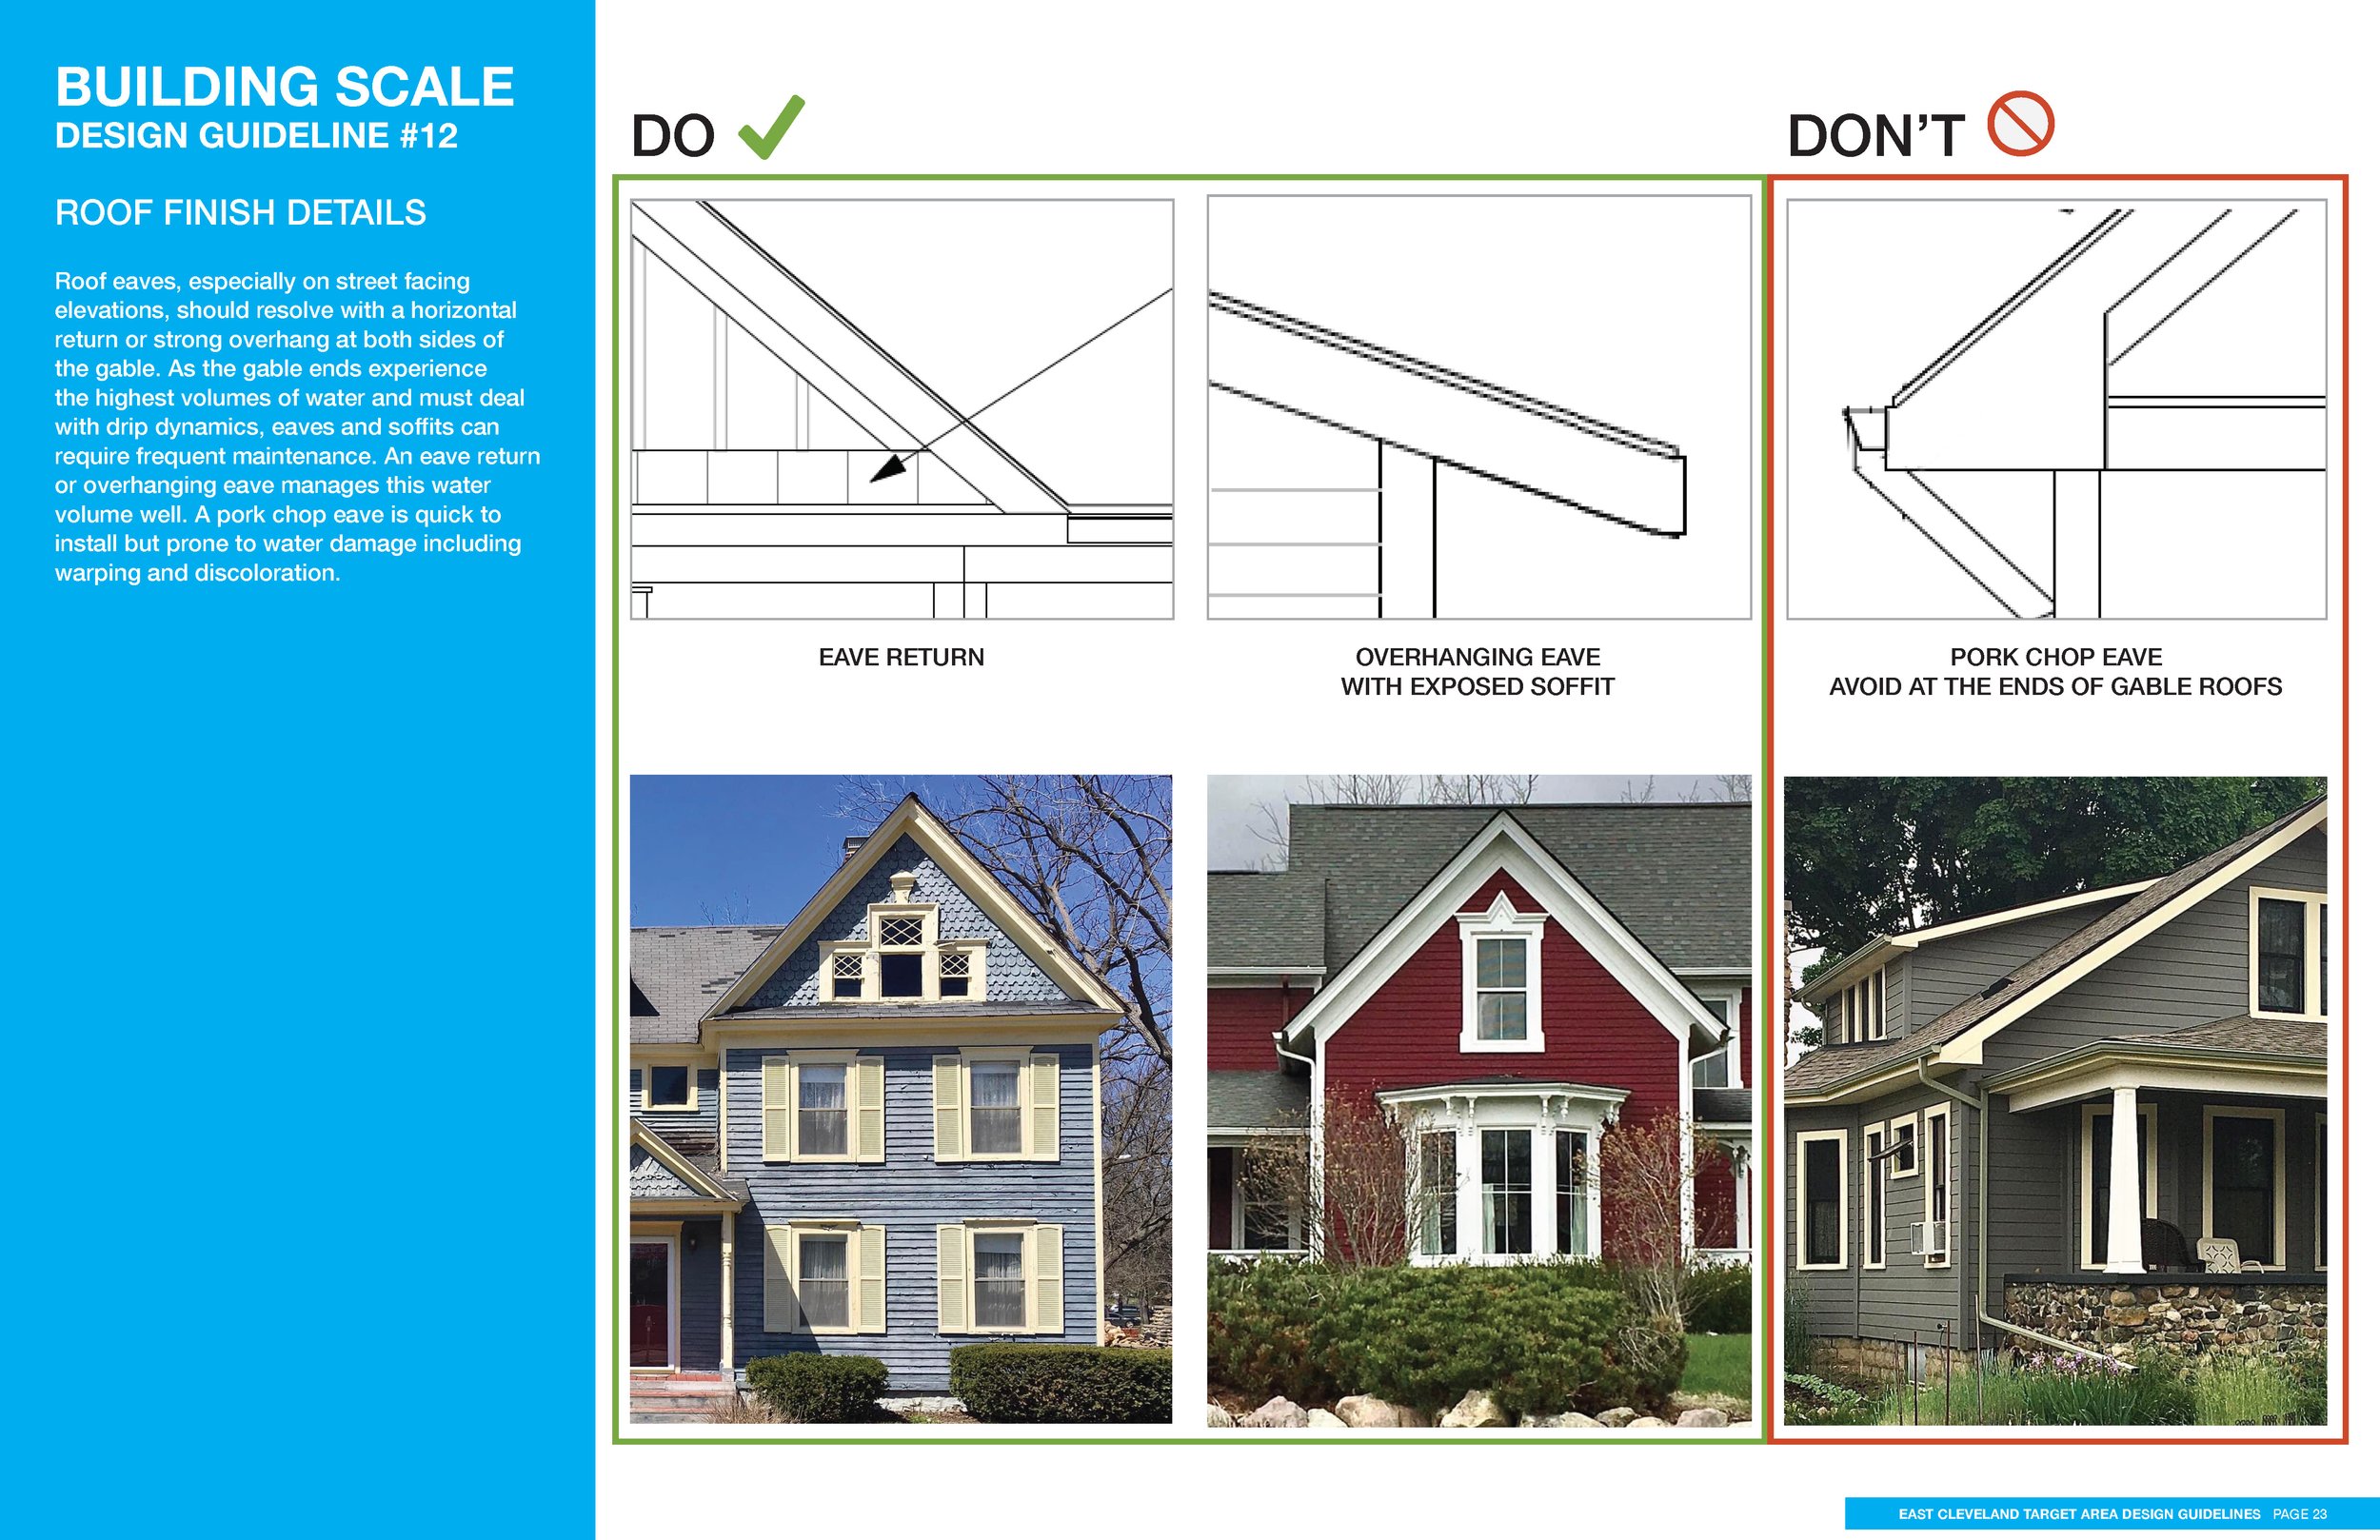 East Cleveland Target Area Design Guidelines_Page_23.jpg